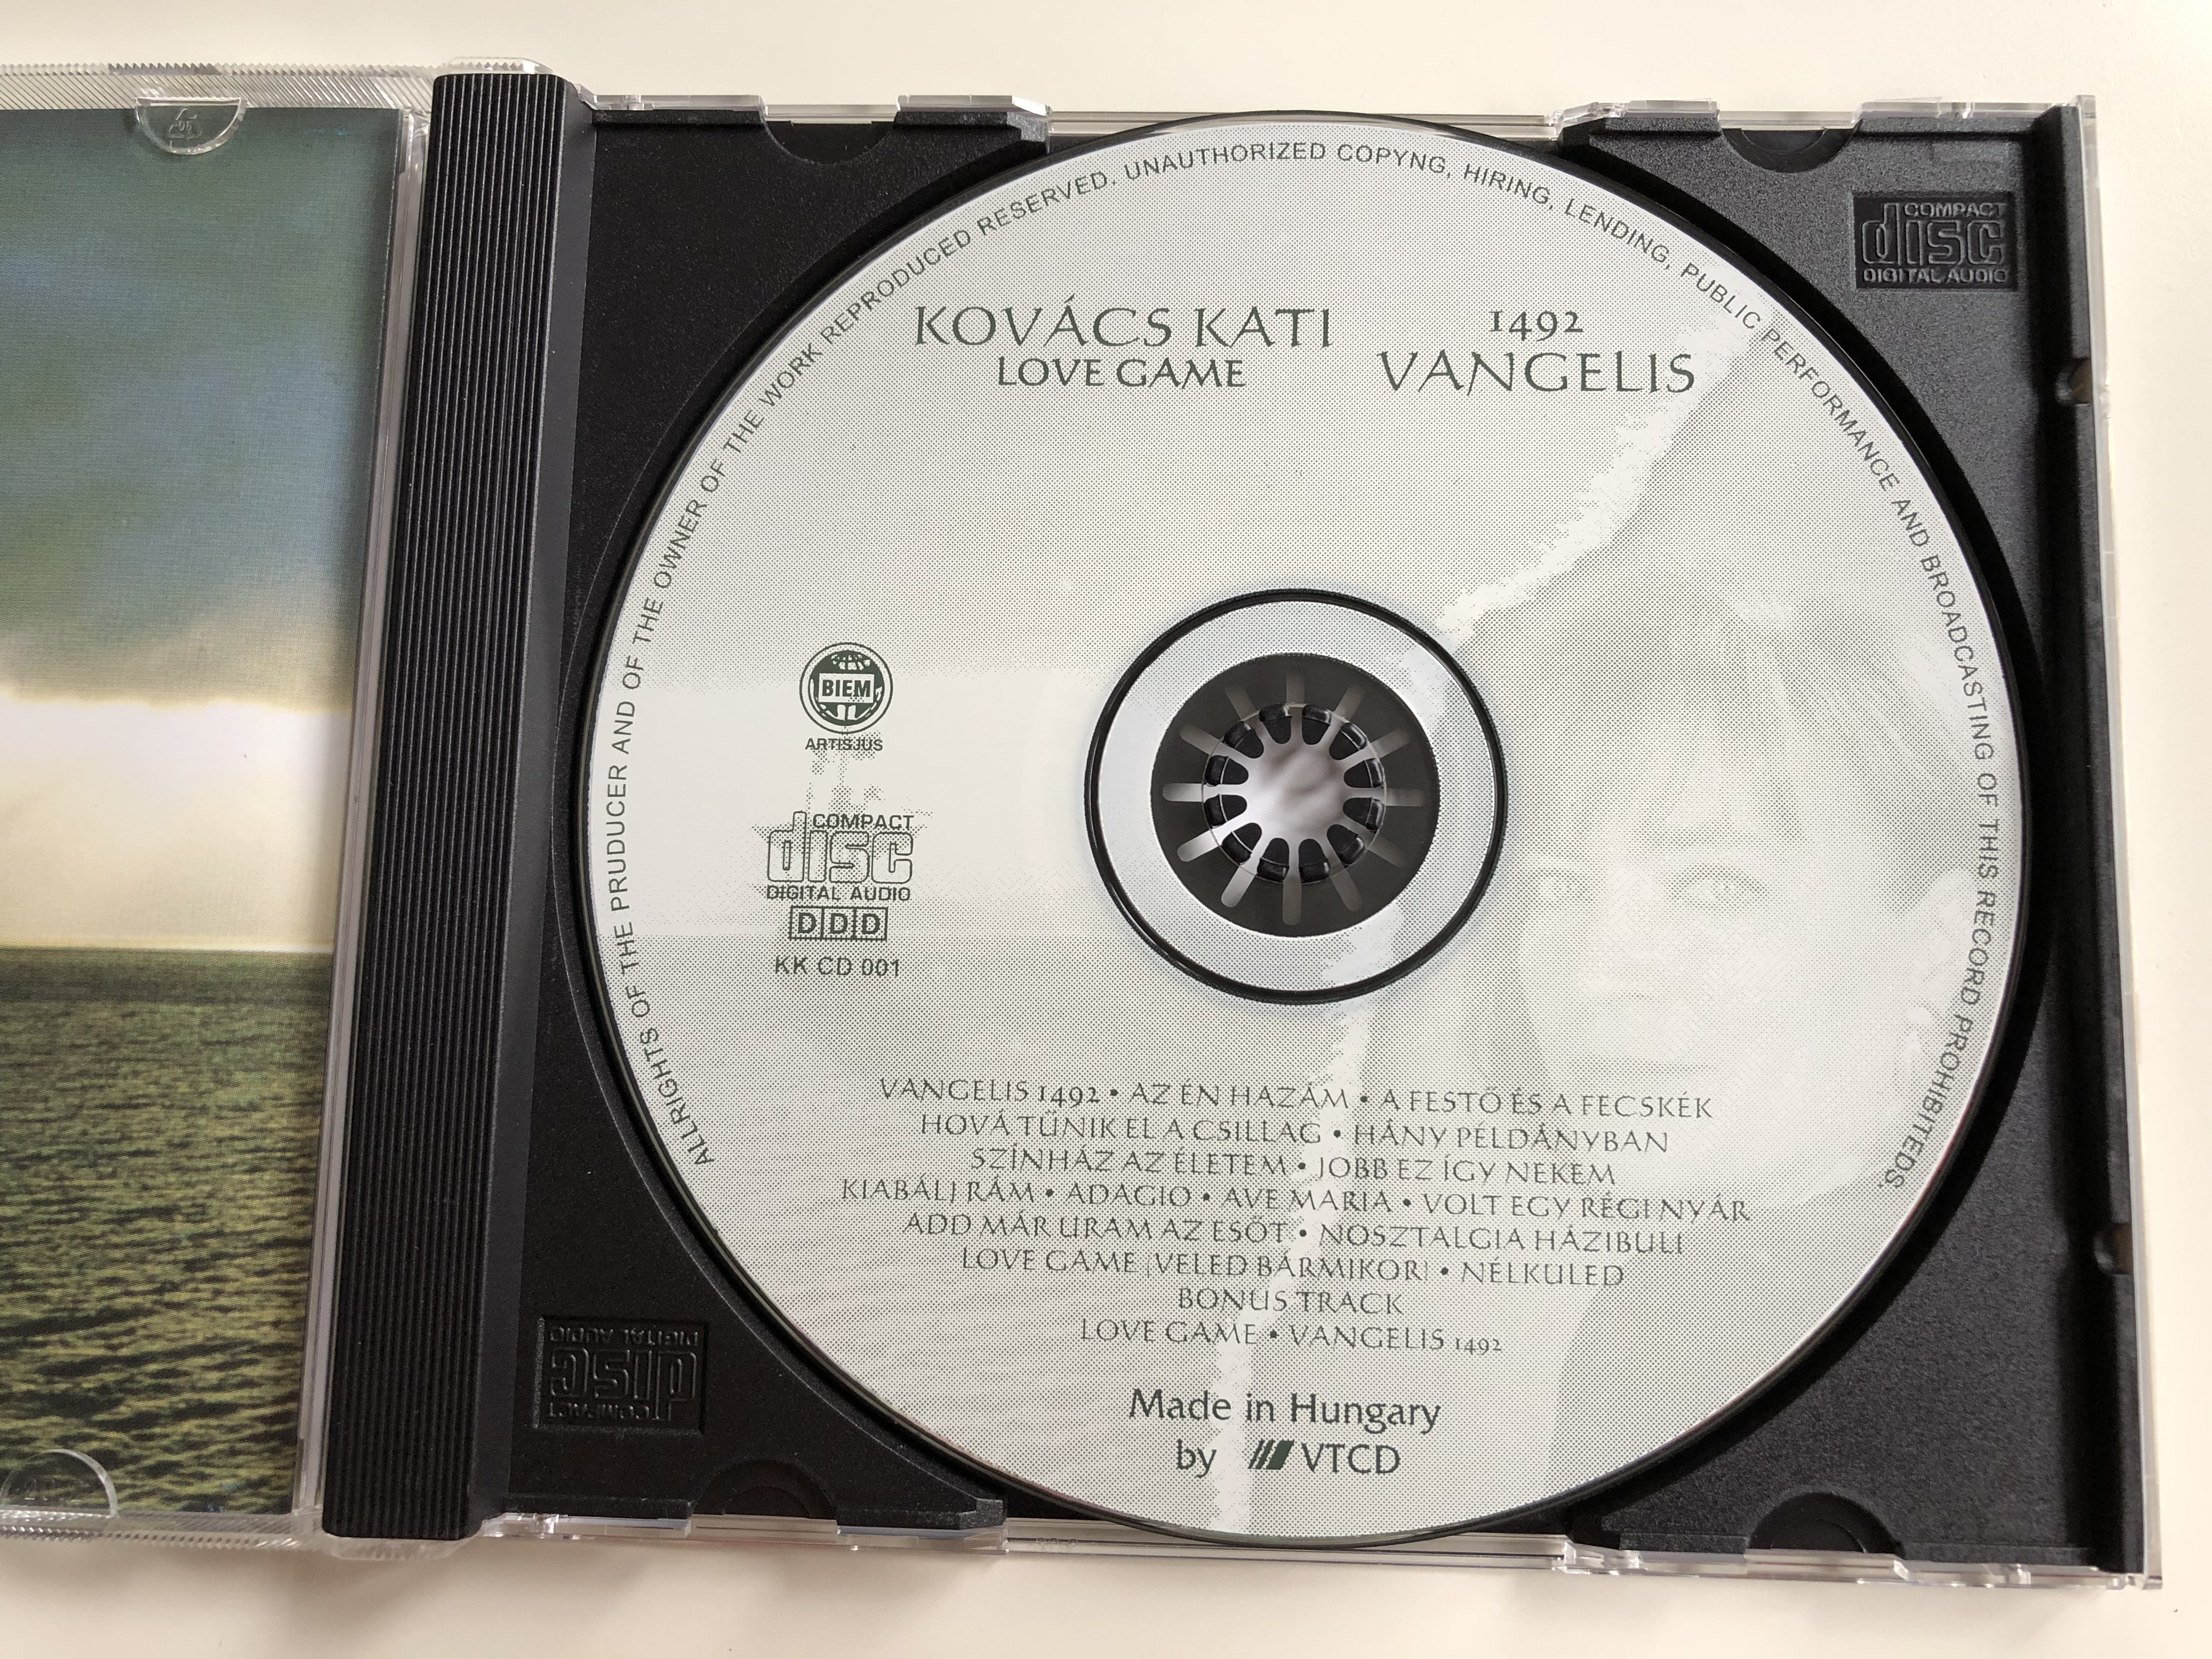 kov-cs-kati-love-game-vangelis-1492-ka-ti-bt.-audio-cd-kk-cd-001-3-.jpg